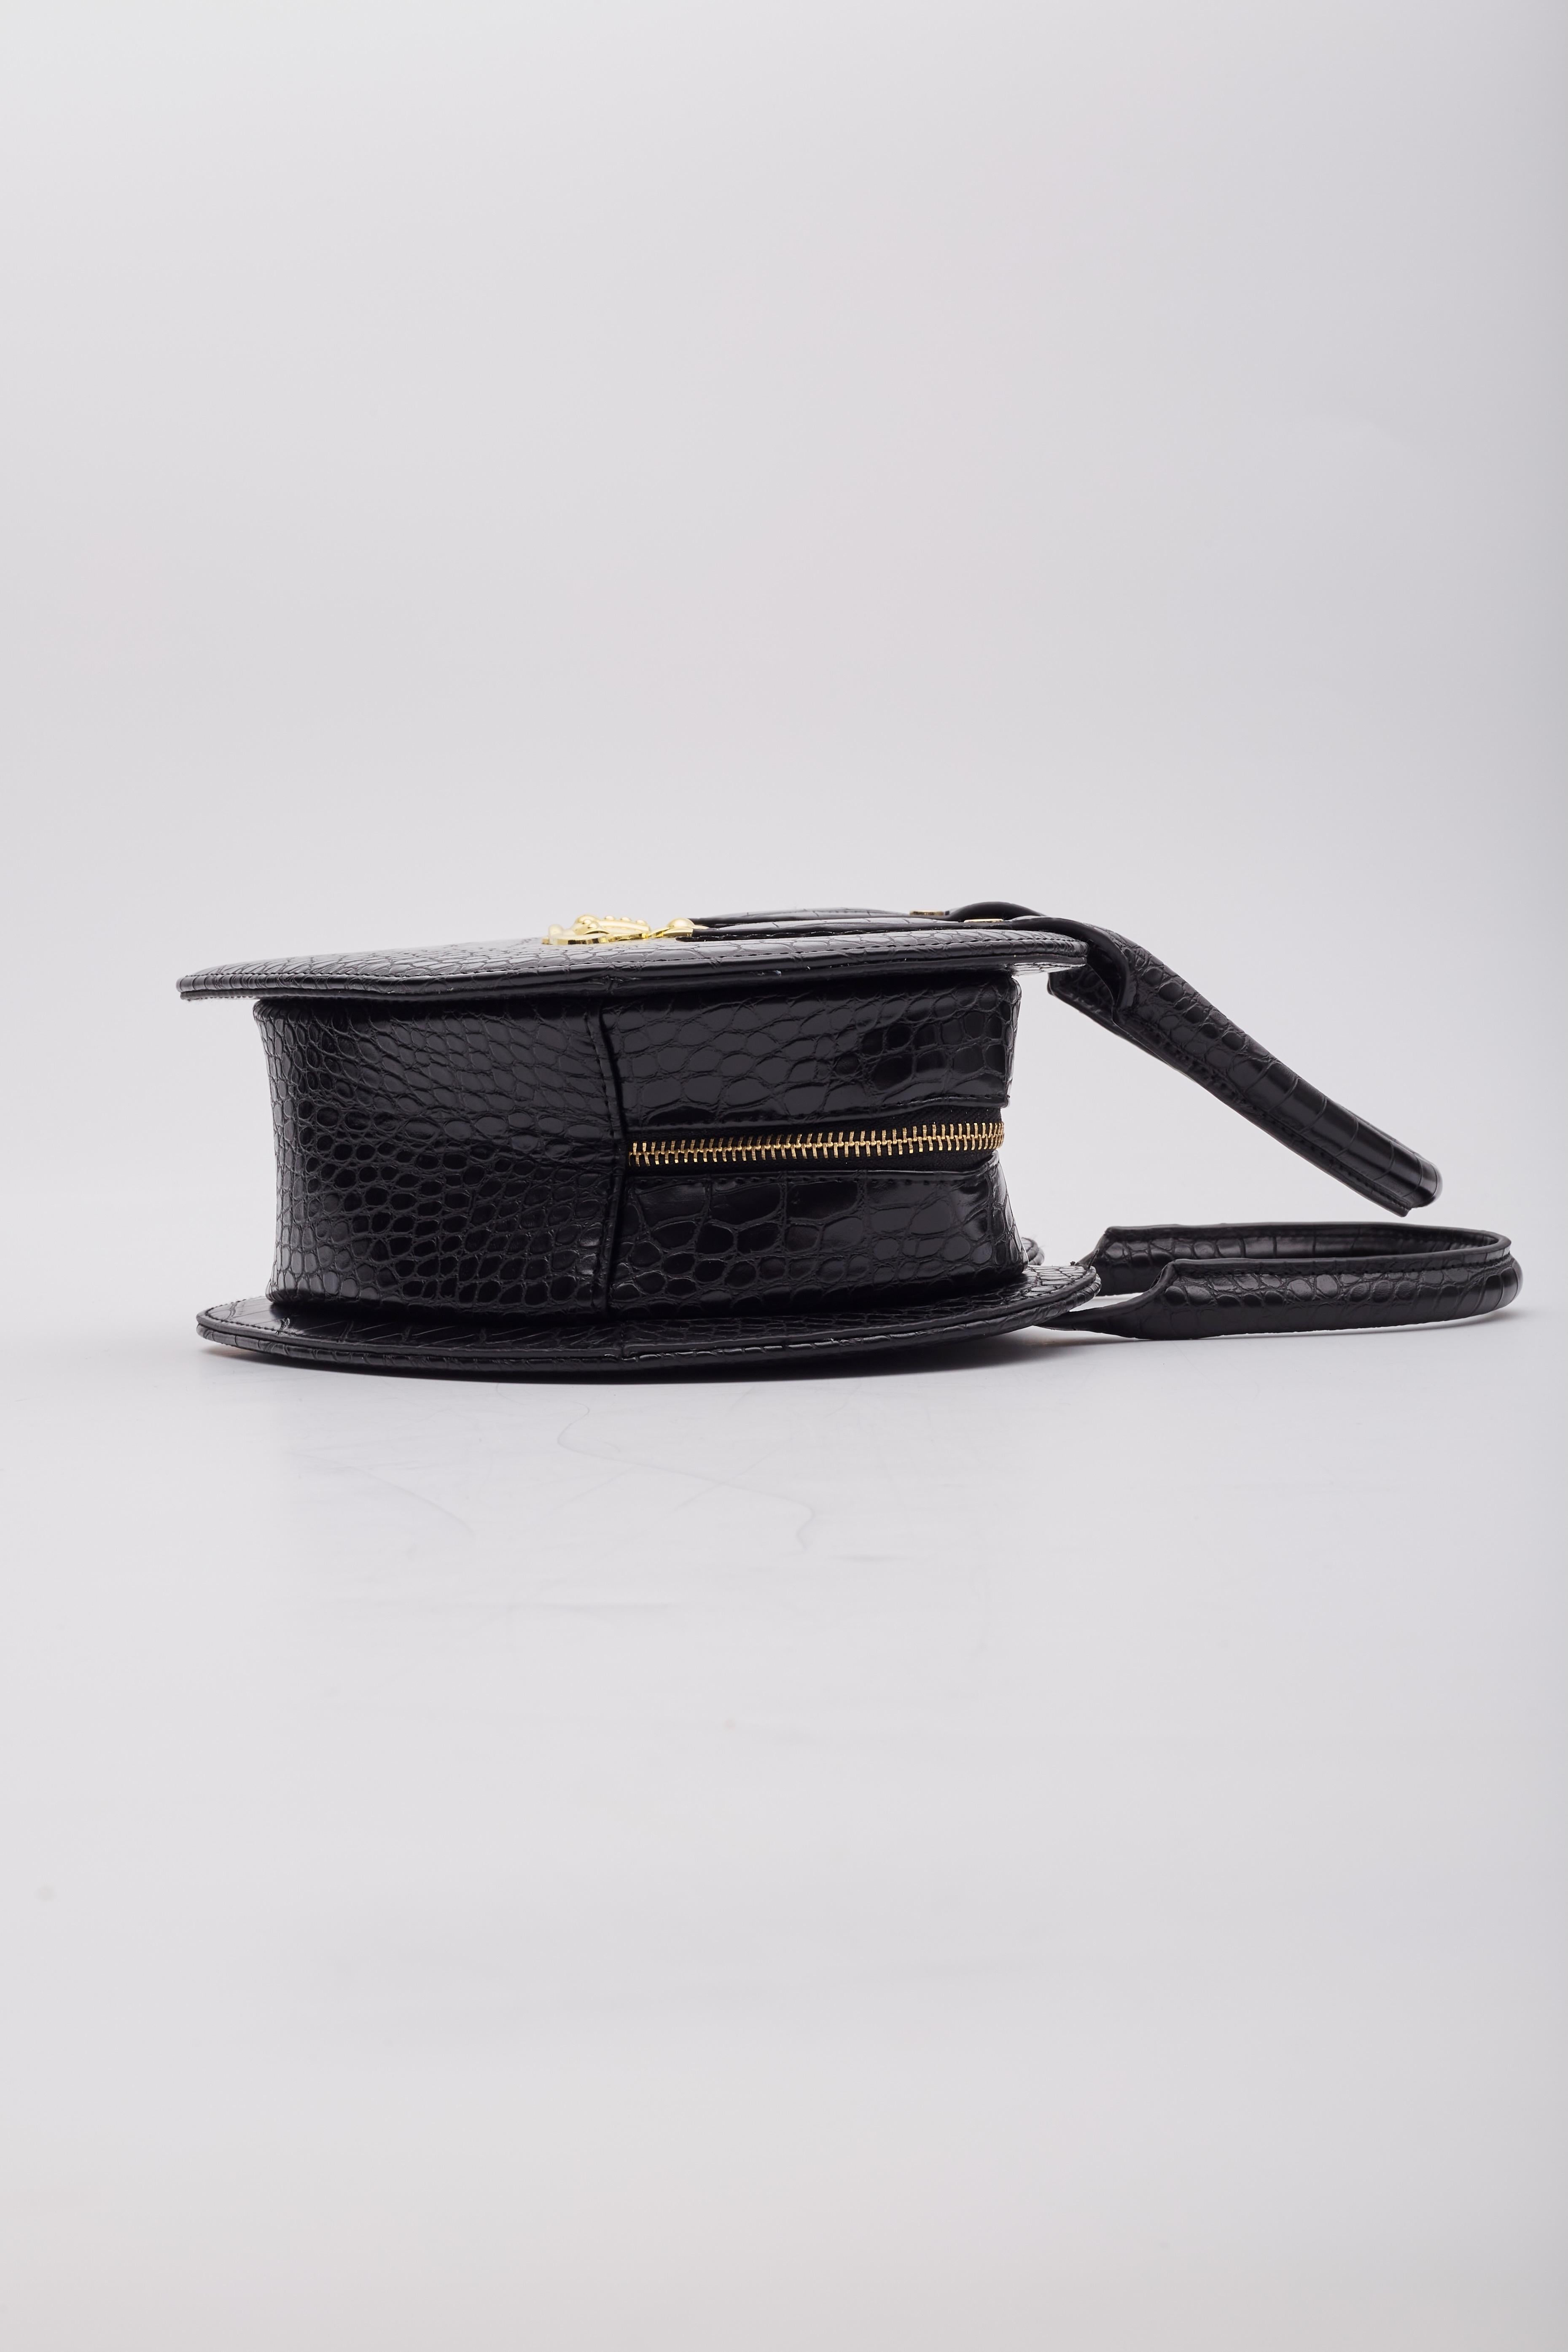 Vivienne Westwood Black Croc Embossed Chancery Heart Handbag For Sale 2